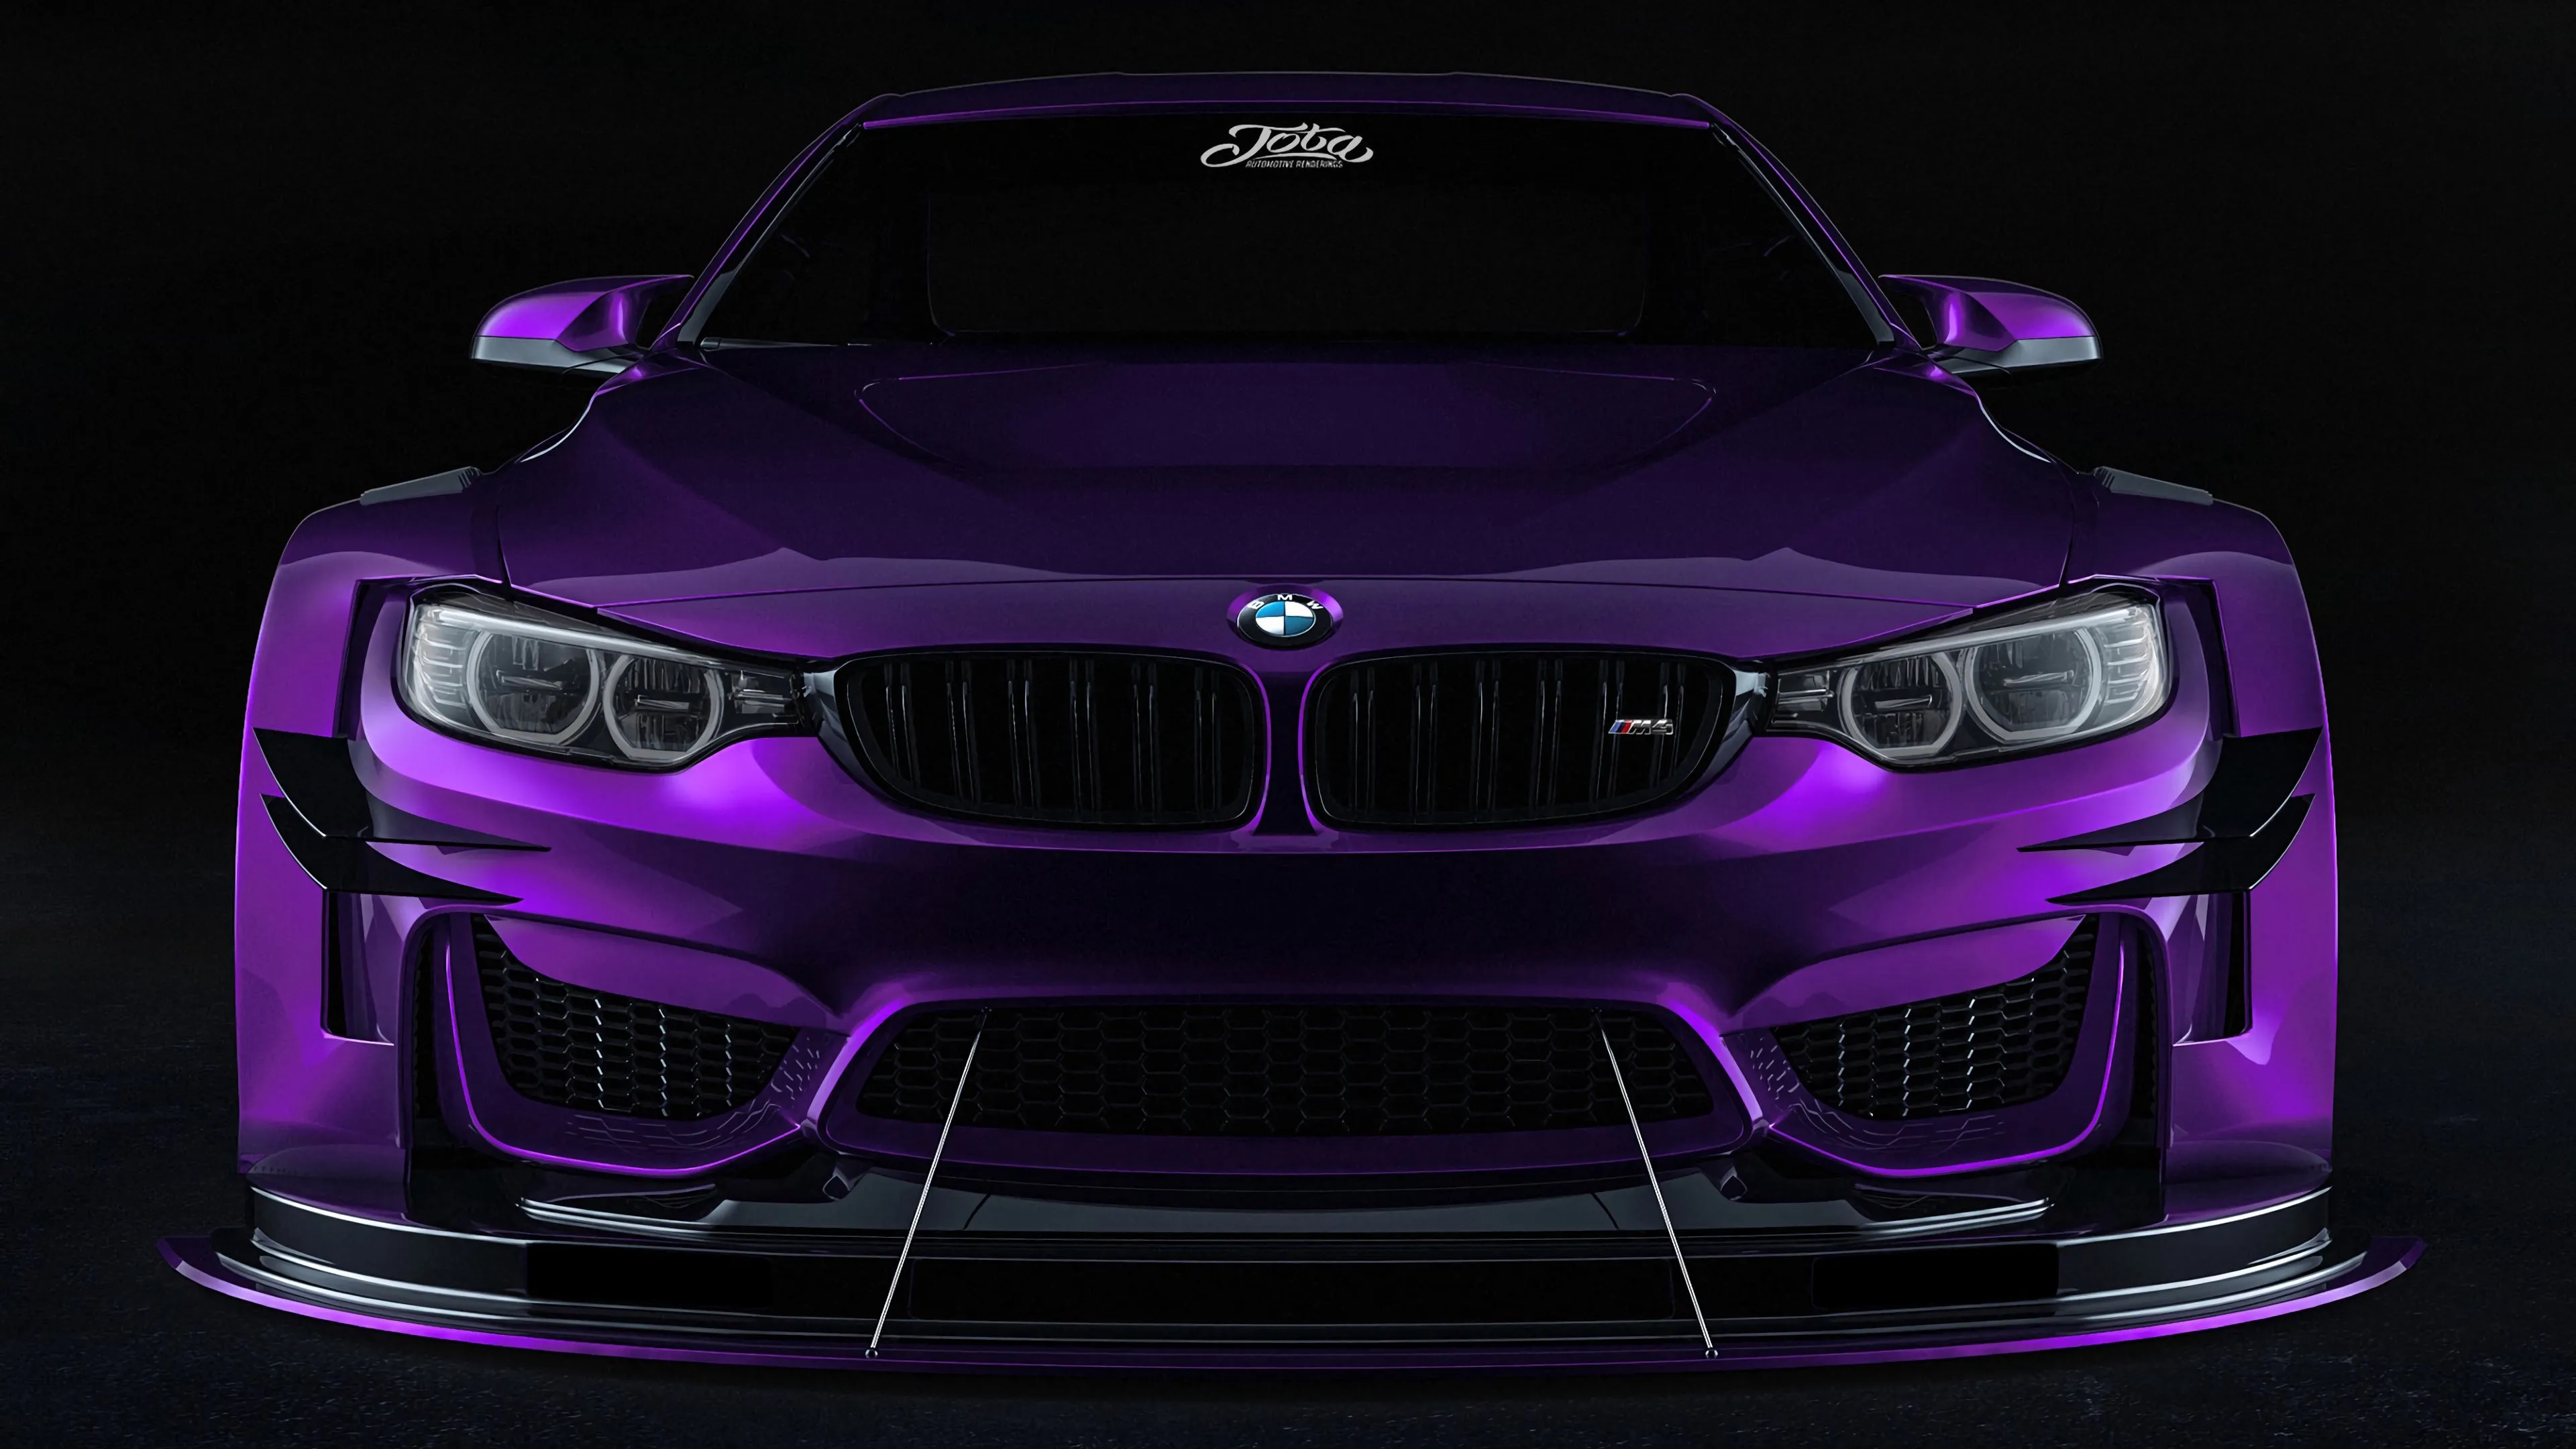 bmw car sportscar purple front view 4k 1691828627